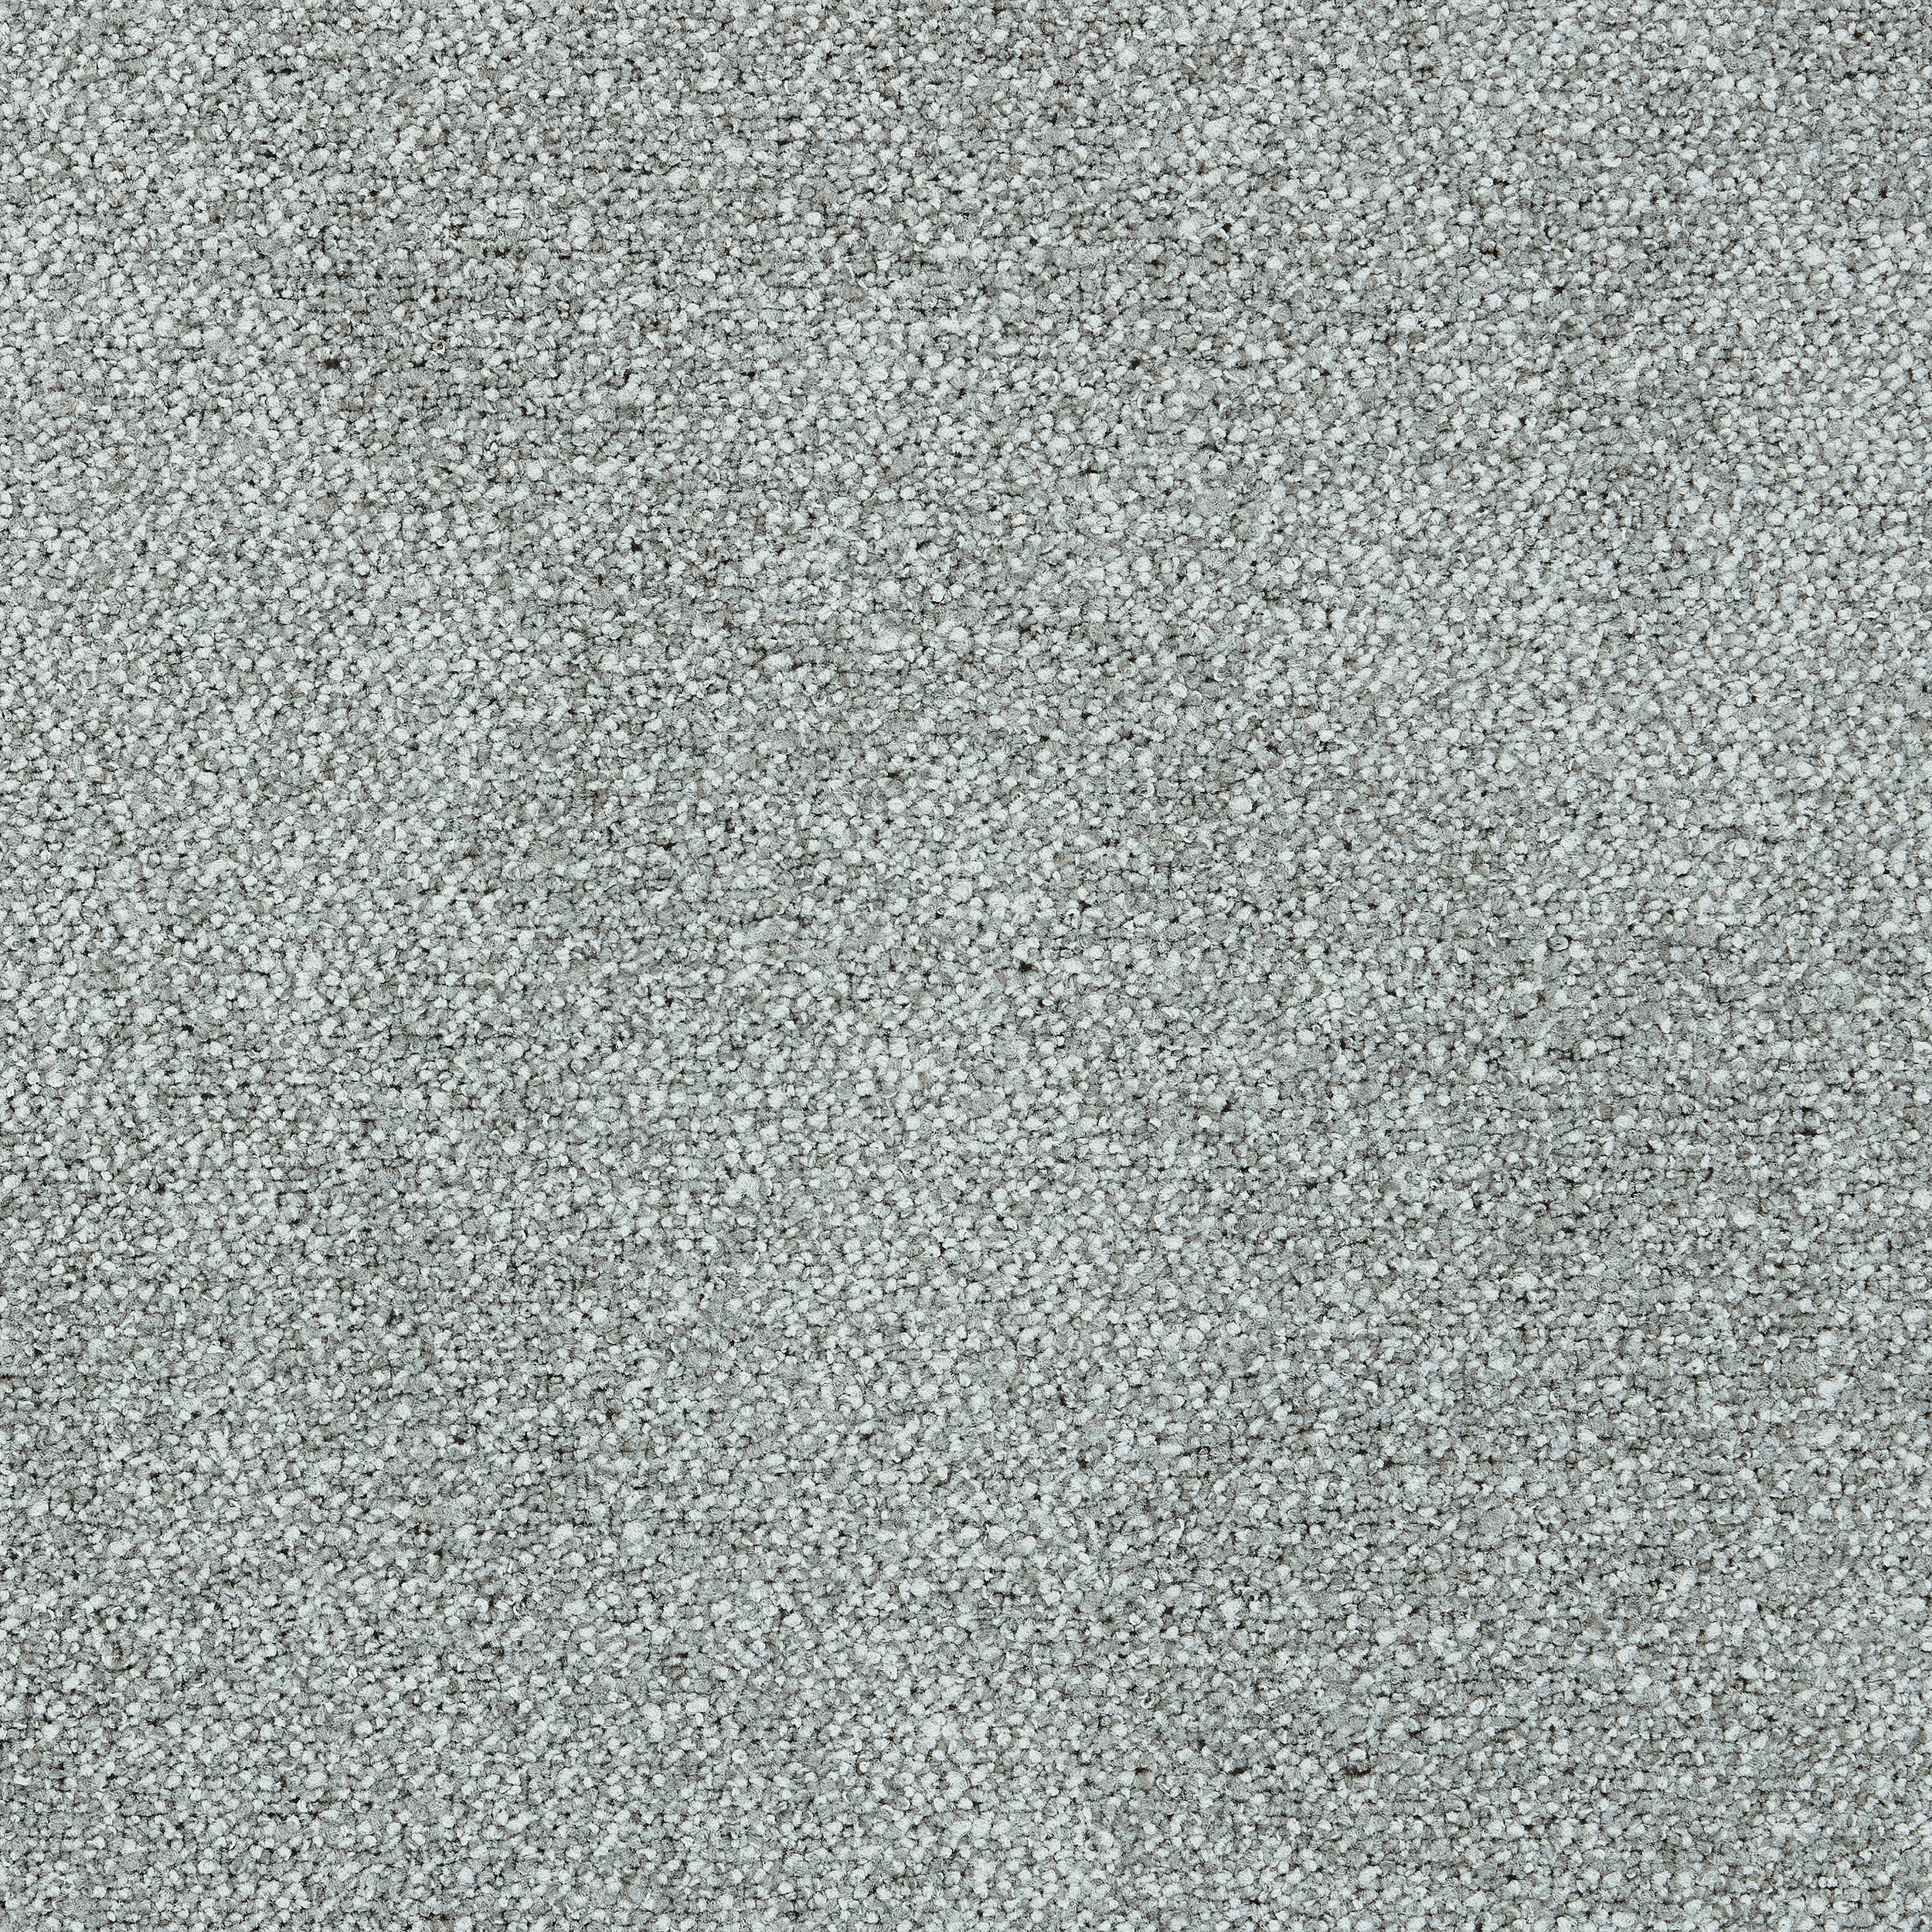 Recreation carpet tile in Create número de imagen 6